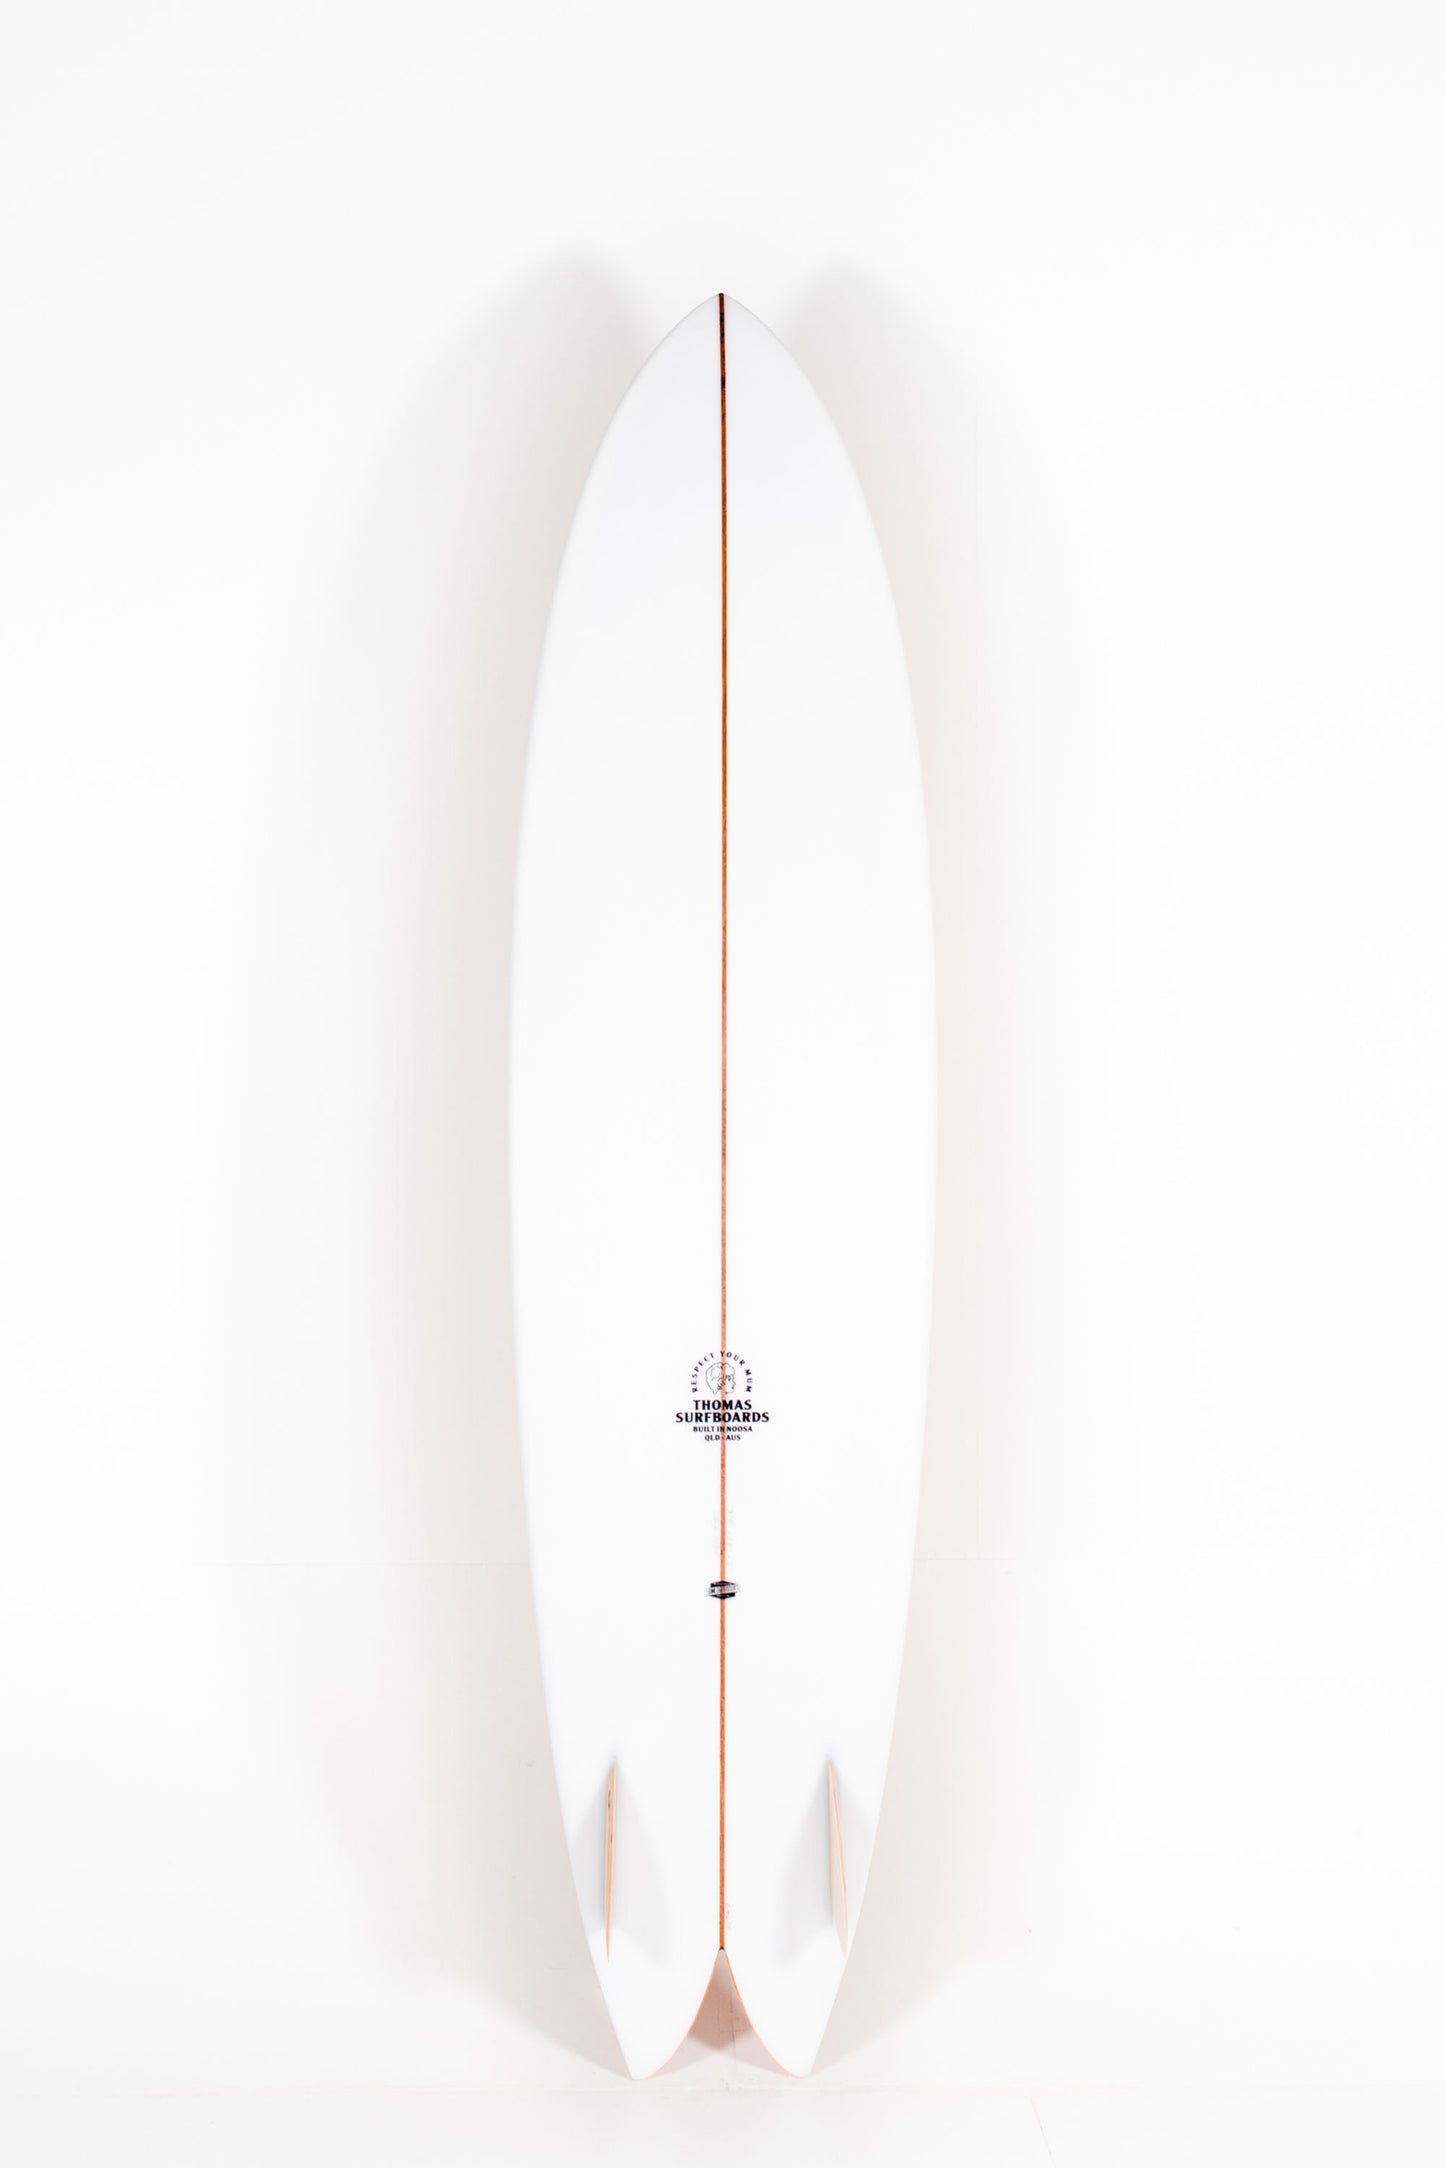 Pukas Surf Shop - Thomas Surfboards - LONG FISH - 7'8"x 22 x 3 - Ref. LONGFISH78